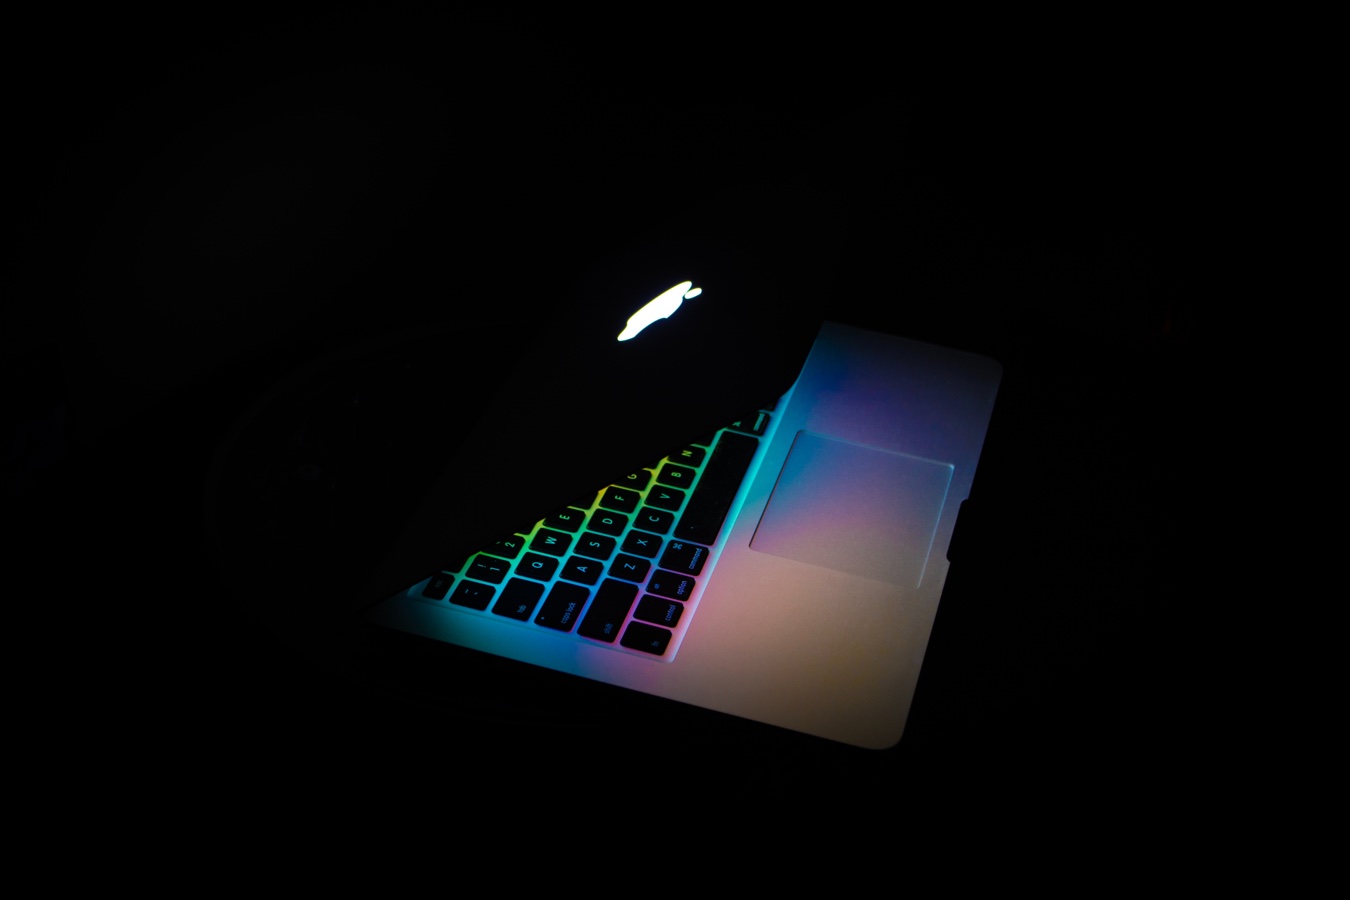 Laptop Macbook, da Apple, em ambiente escuro